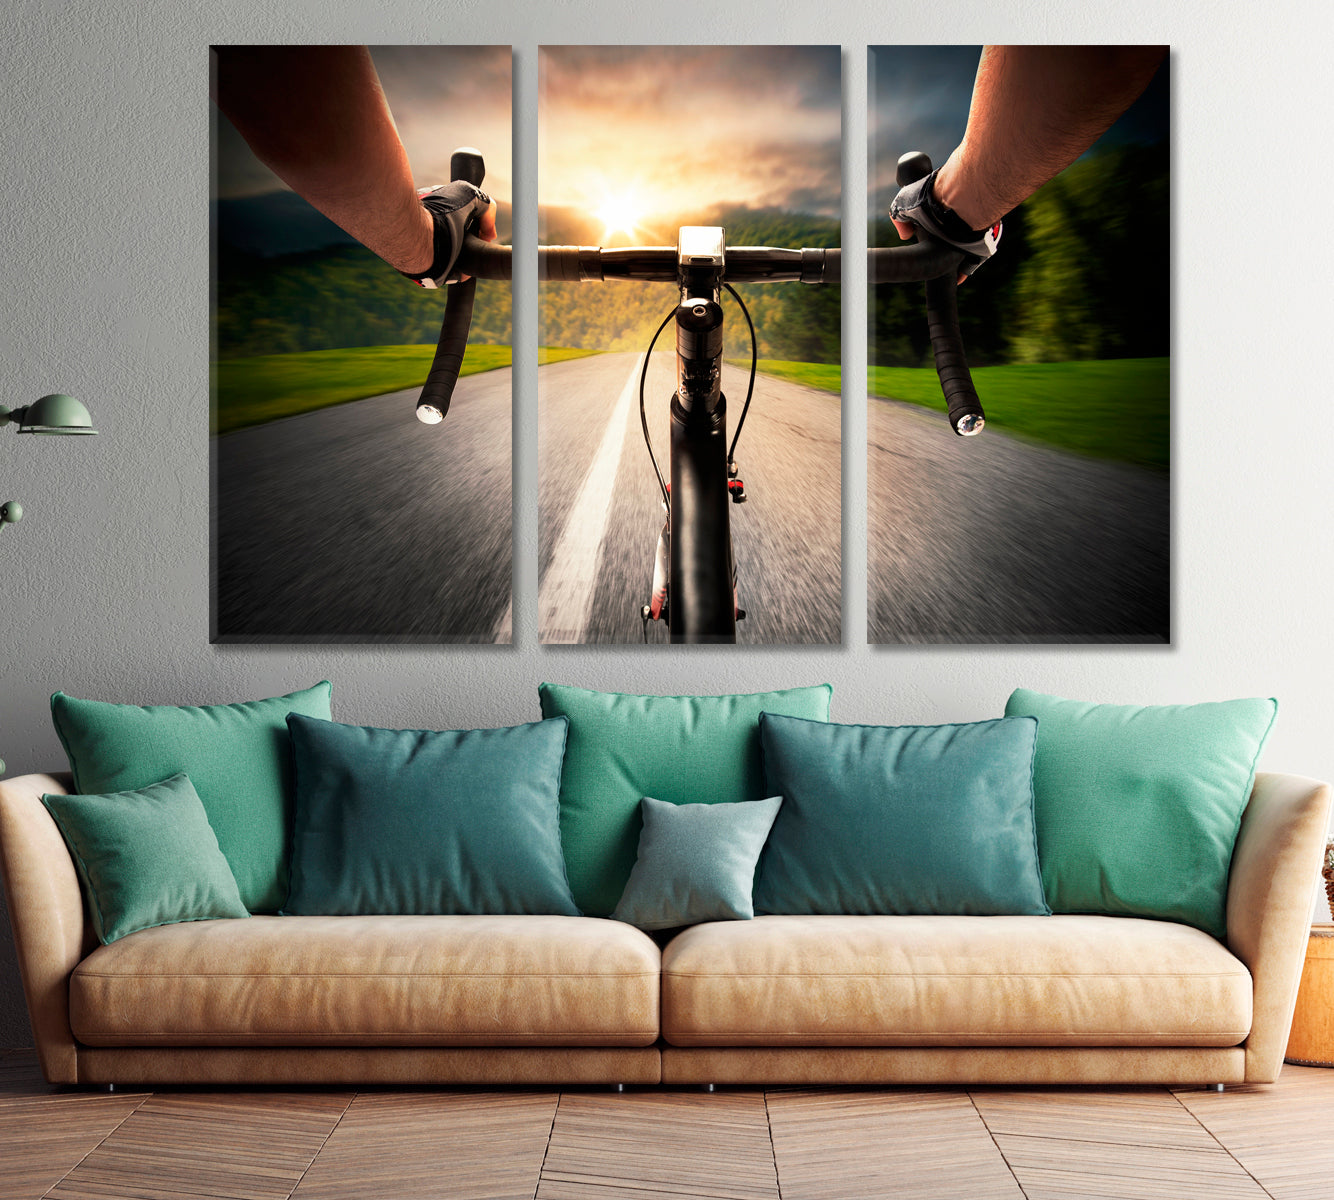 SPORT Track Cyclist Riding Road Motivation Sport Poster Print Decor Artesty 3 panels 36" x 24" 